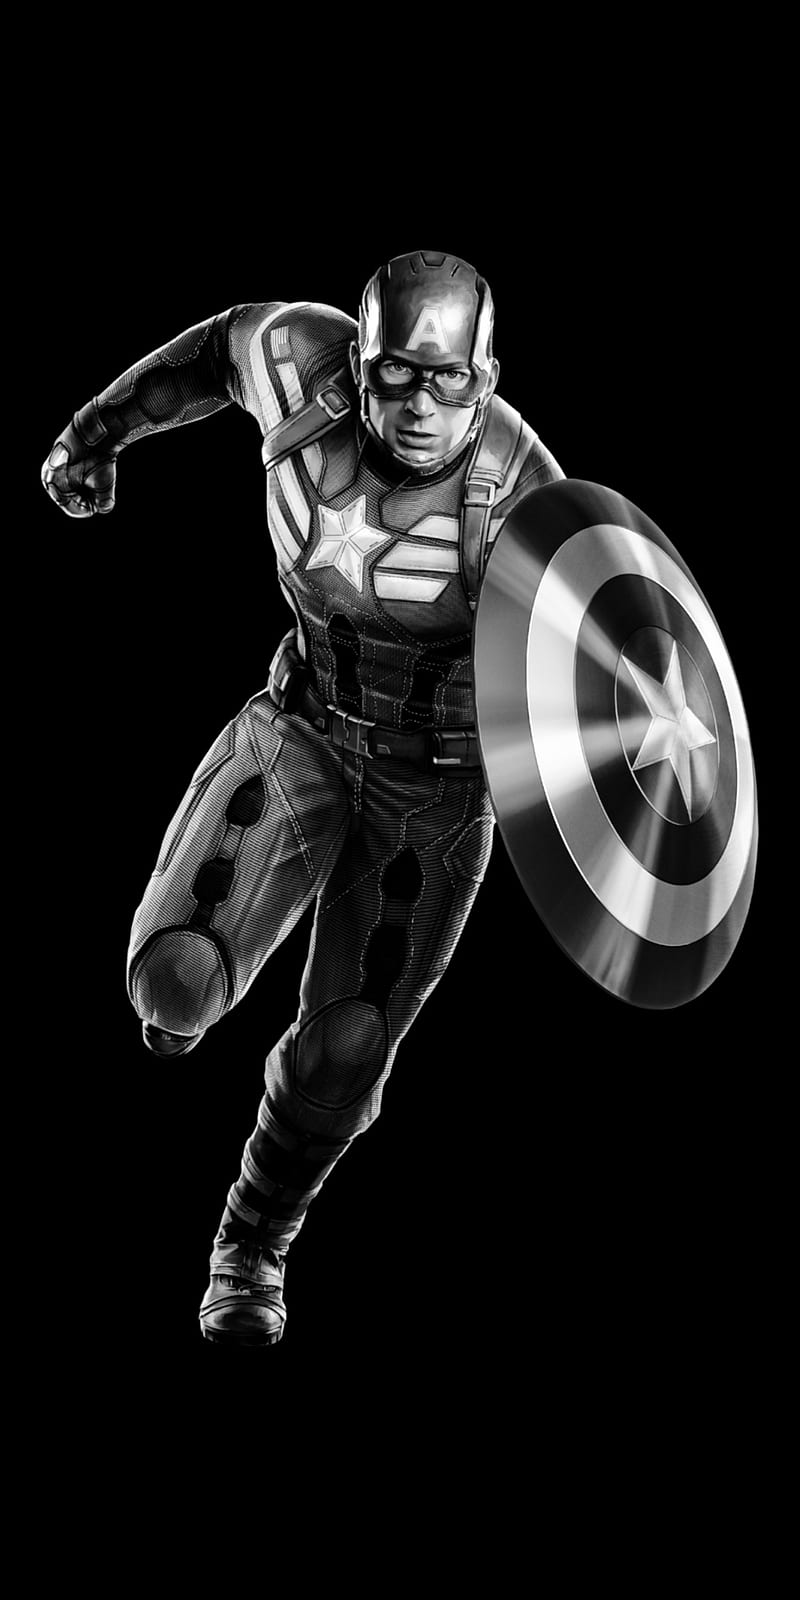 720x1280 First Avenger, Captain America, minimalist wallpaper | Captain  america wallpaper, Captain america art, Superhero wallpaper